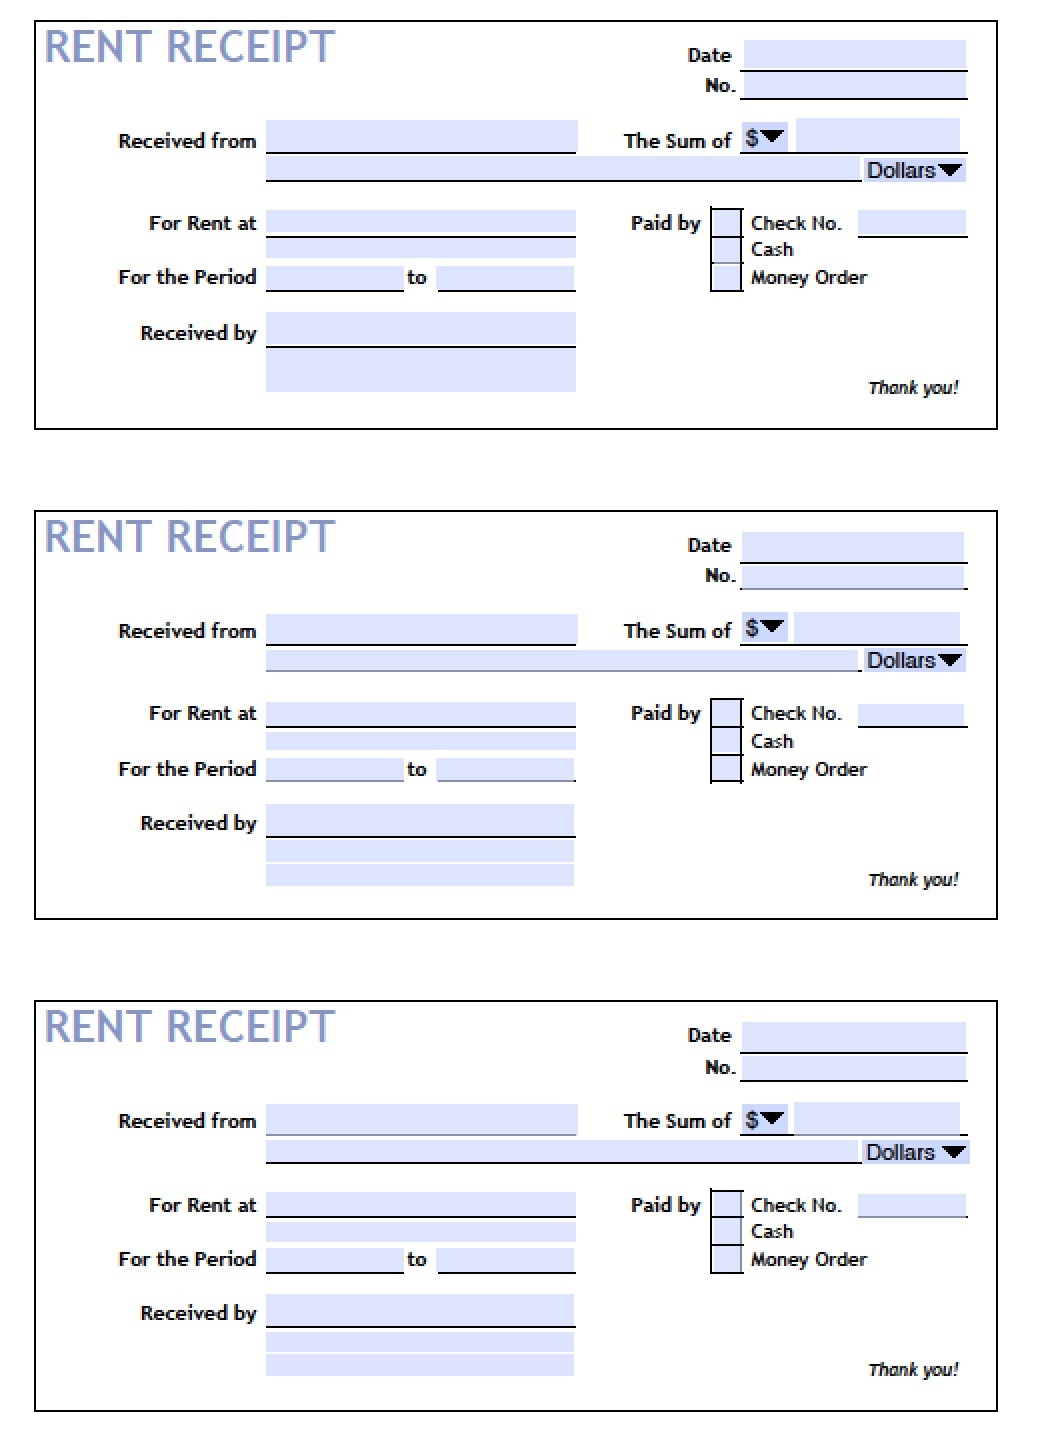 Free Rental Space Receipt Template Pretty Receipt Forms